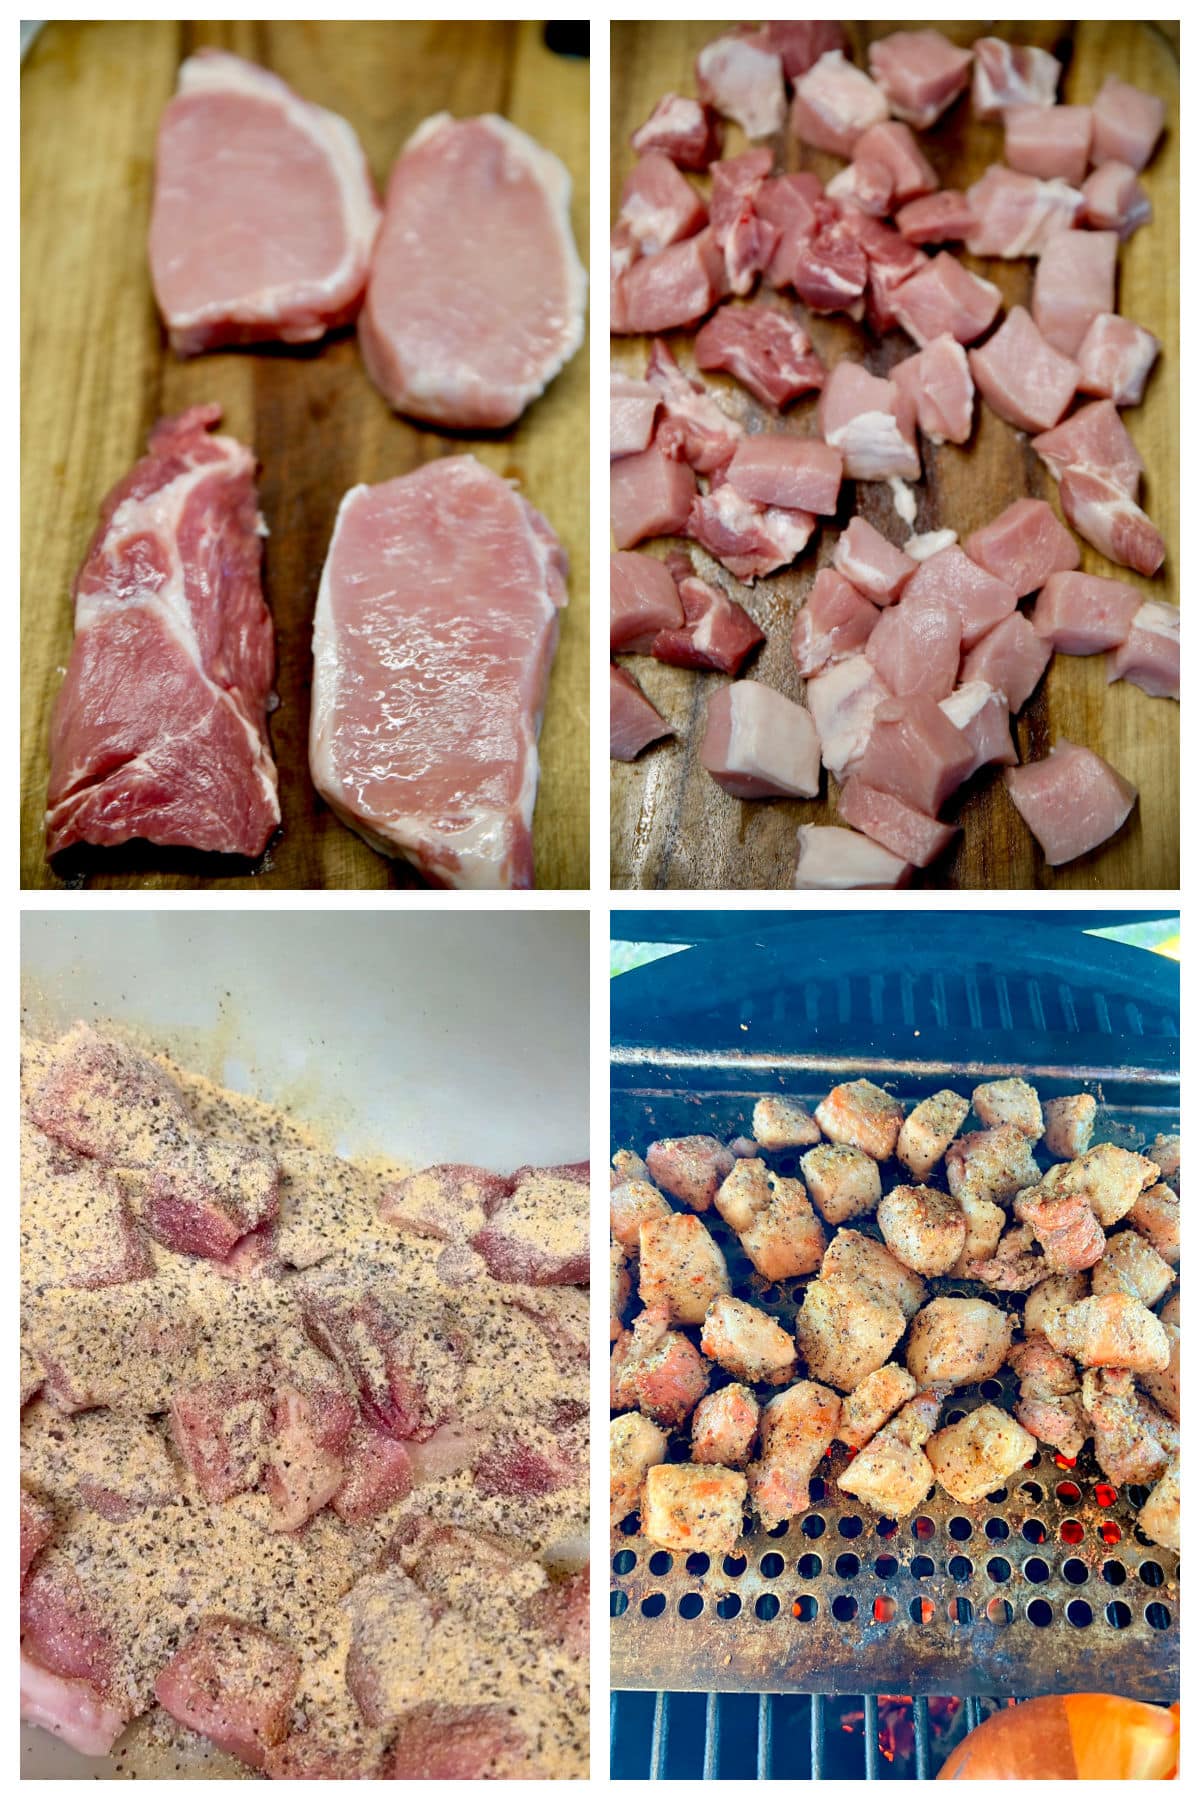 Collage: Cutting pork into chunks, seasoning, grilling.